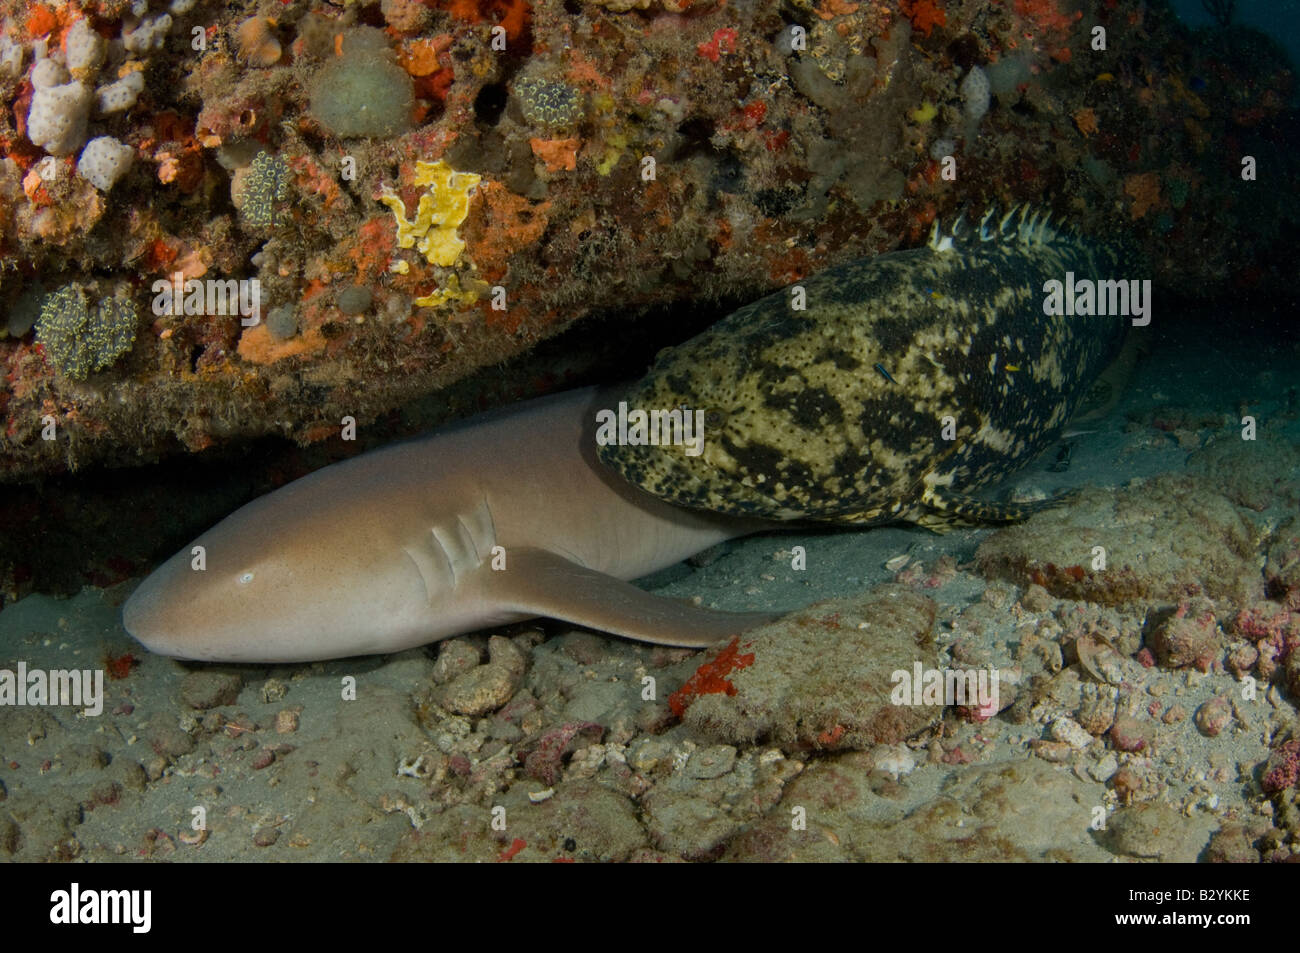 A Nurse Shark Ginglymostoma cirratum and Goliath Grouper Epinephelus itajara share a ledge in Juno Beach FL Stock Photo